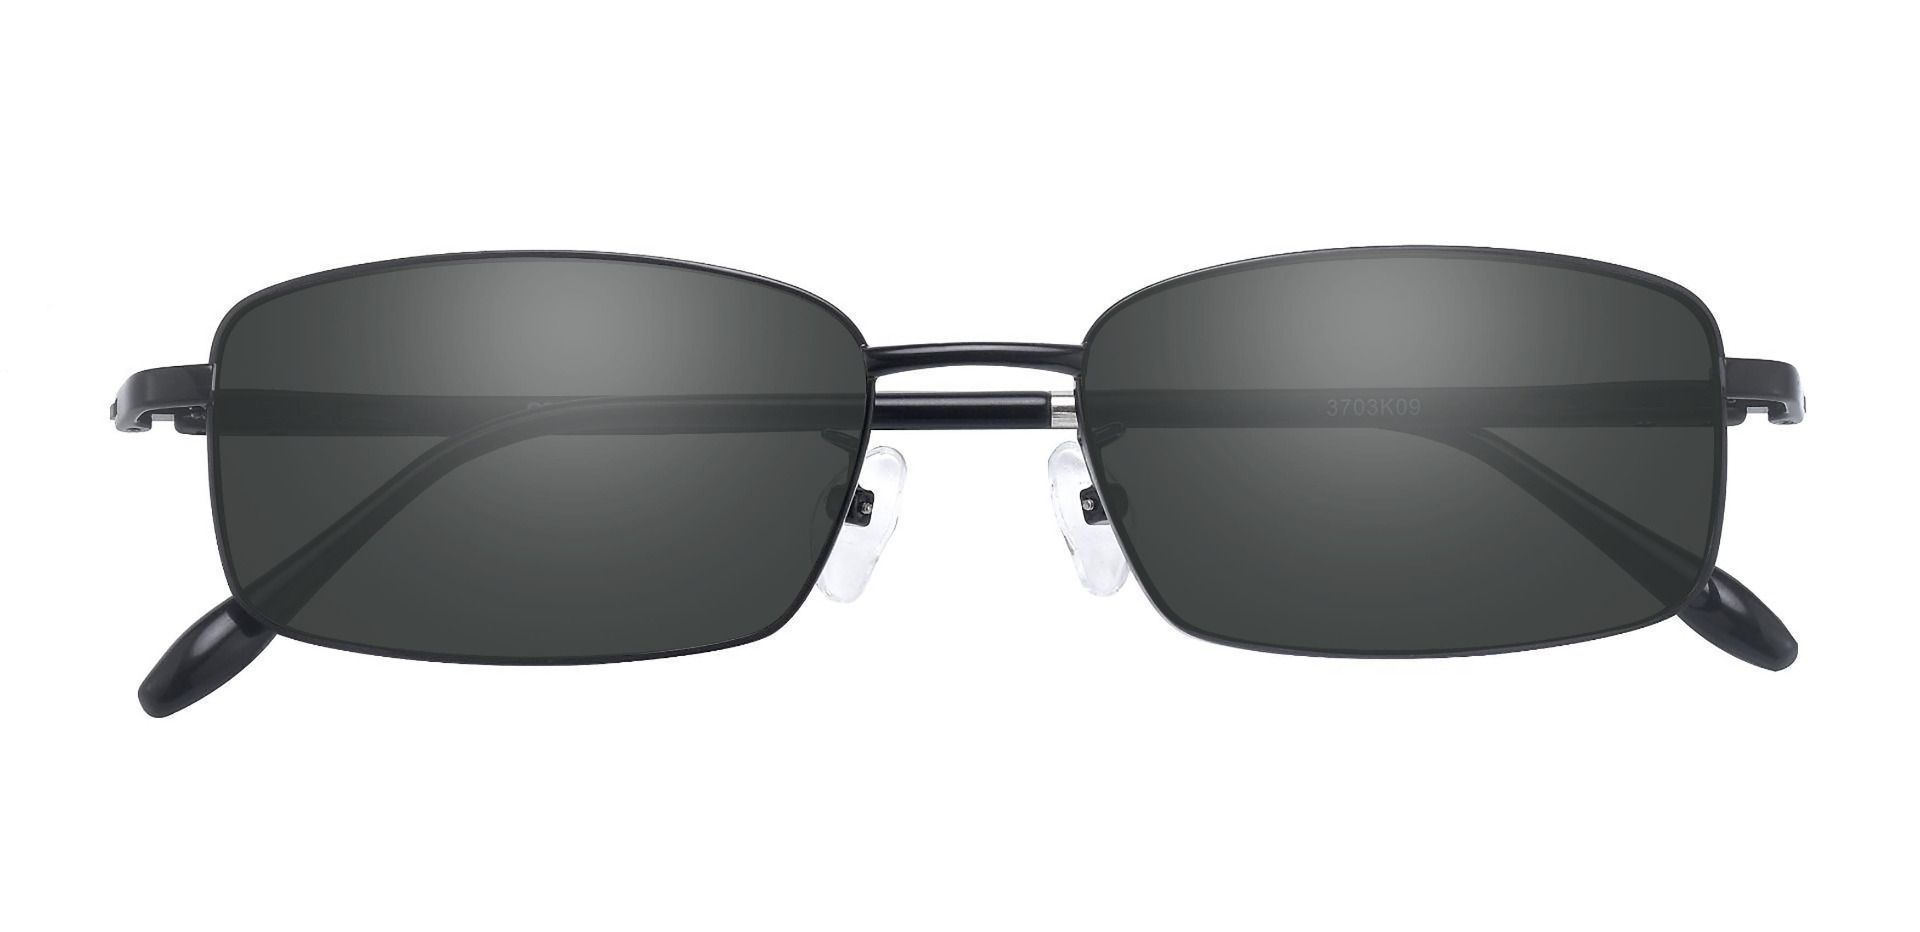 Press Rectangle Prescription Sunglasses - Black Frame With Gray Lenses